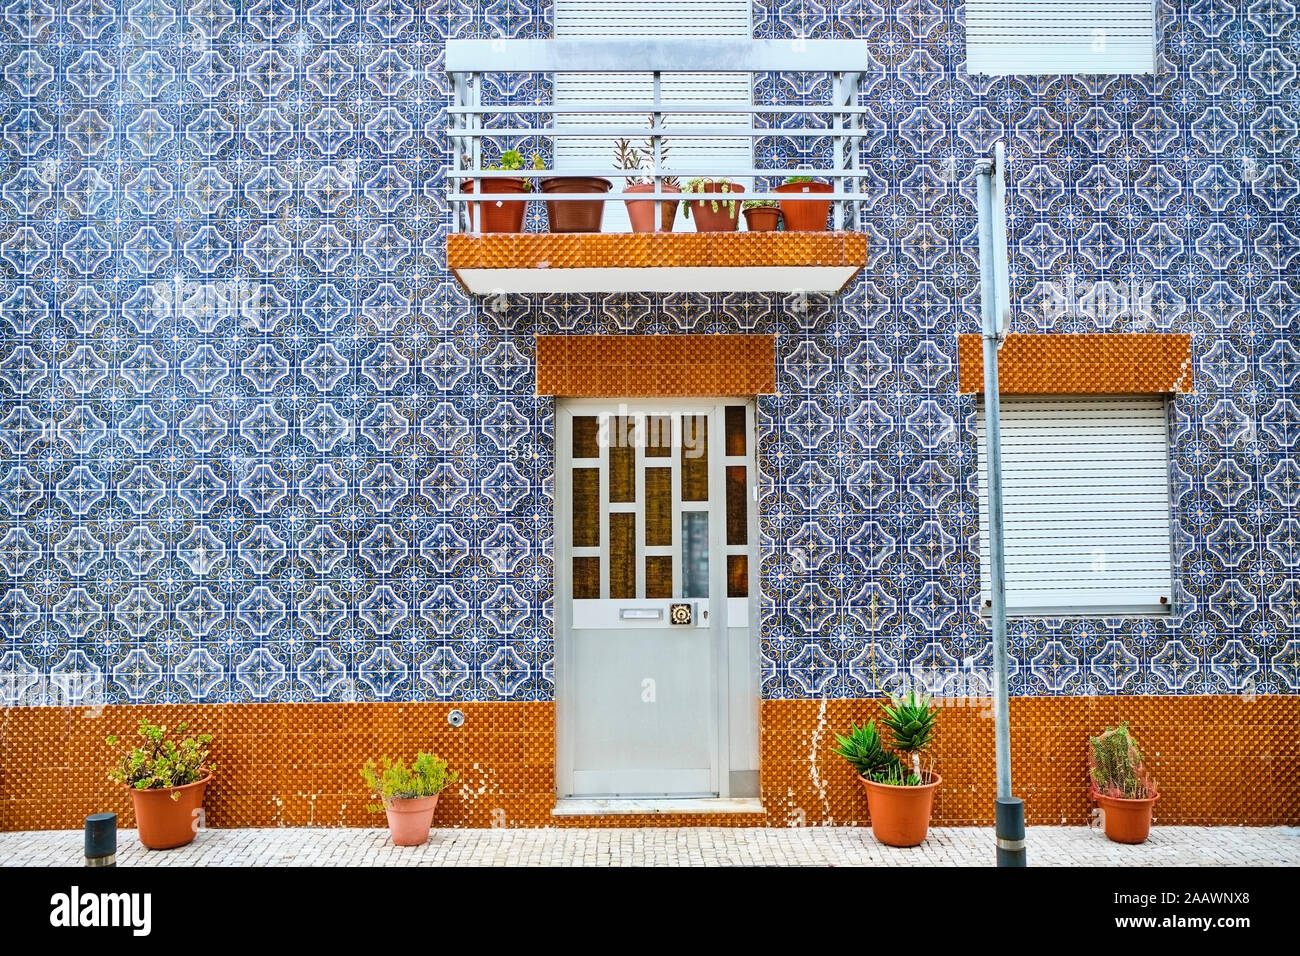 Portugal, Porto, Afurada, Front view of unique ornate house facade Stock Photo